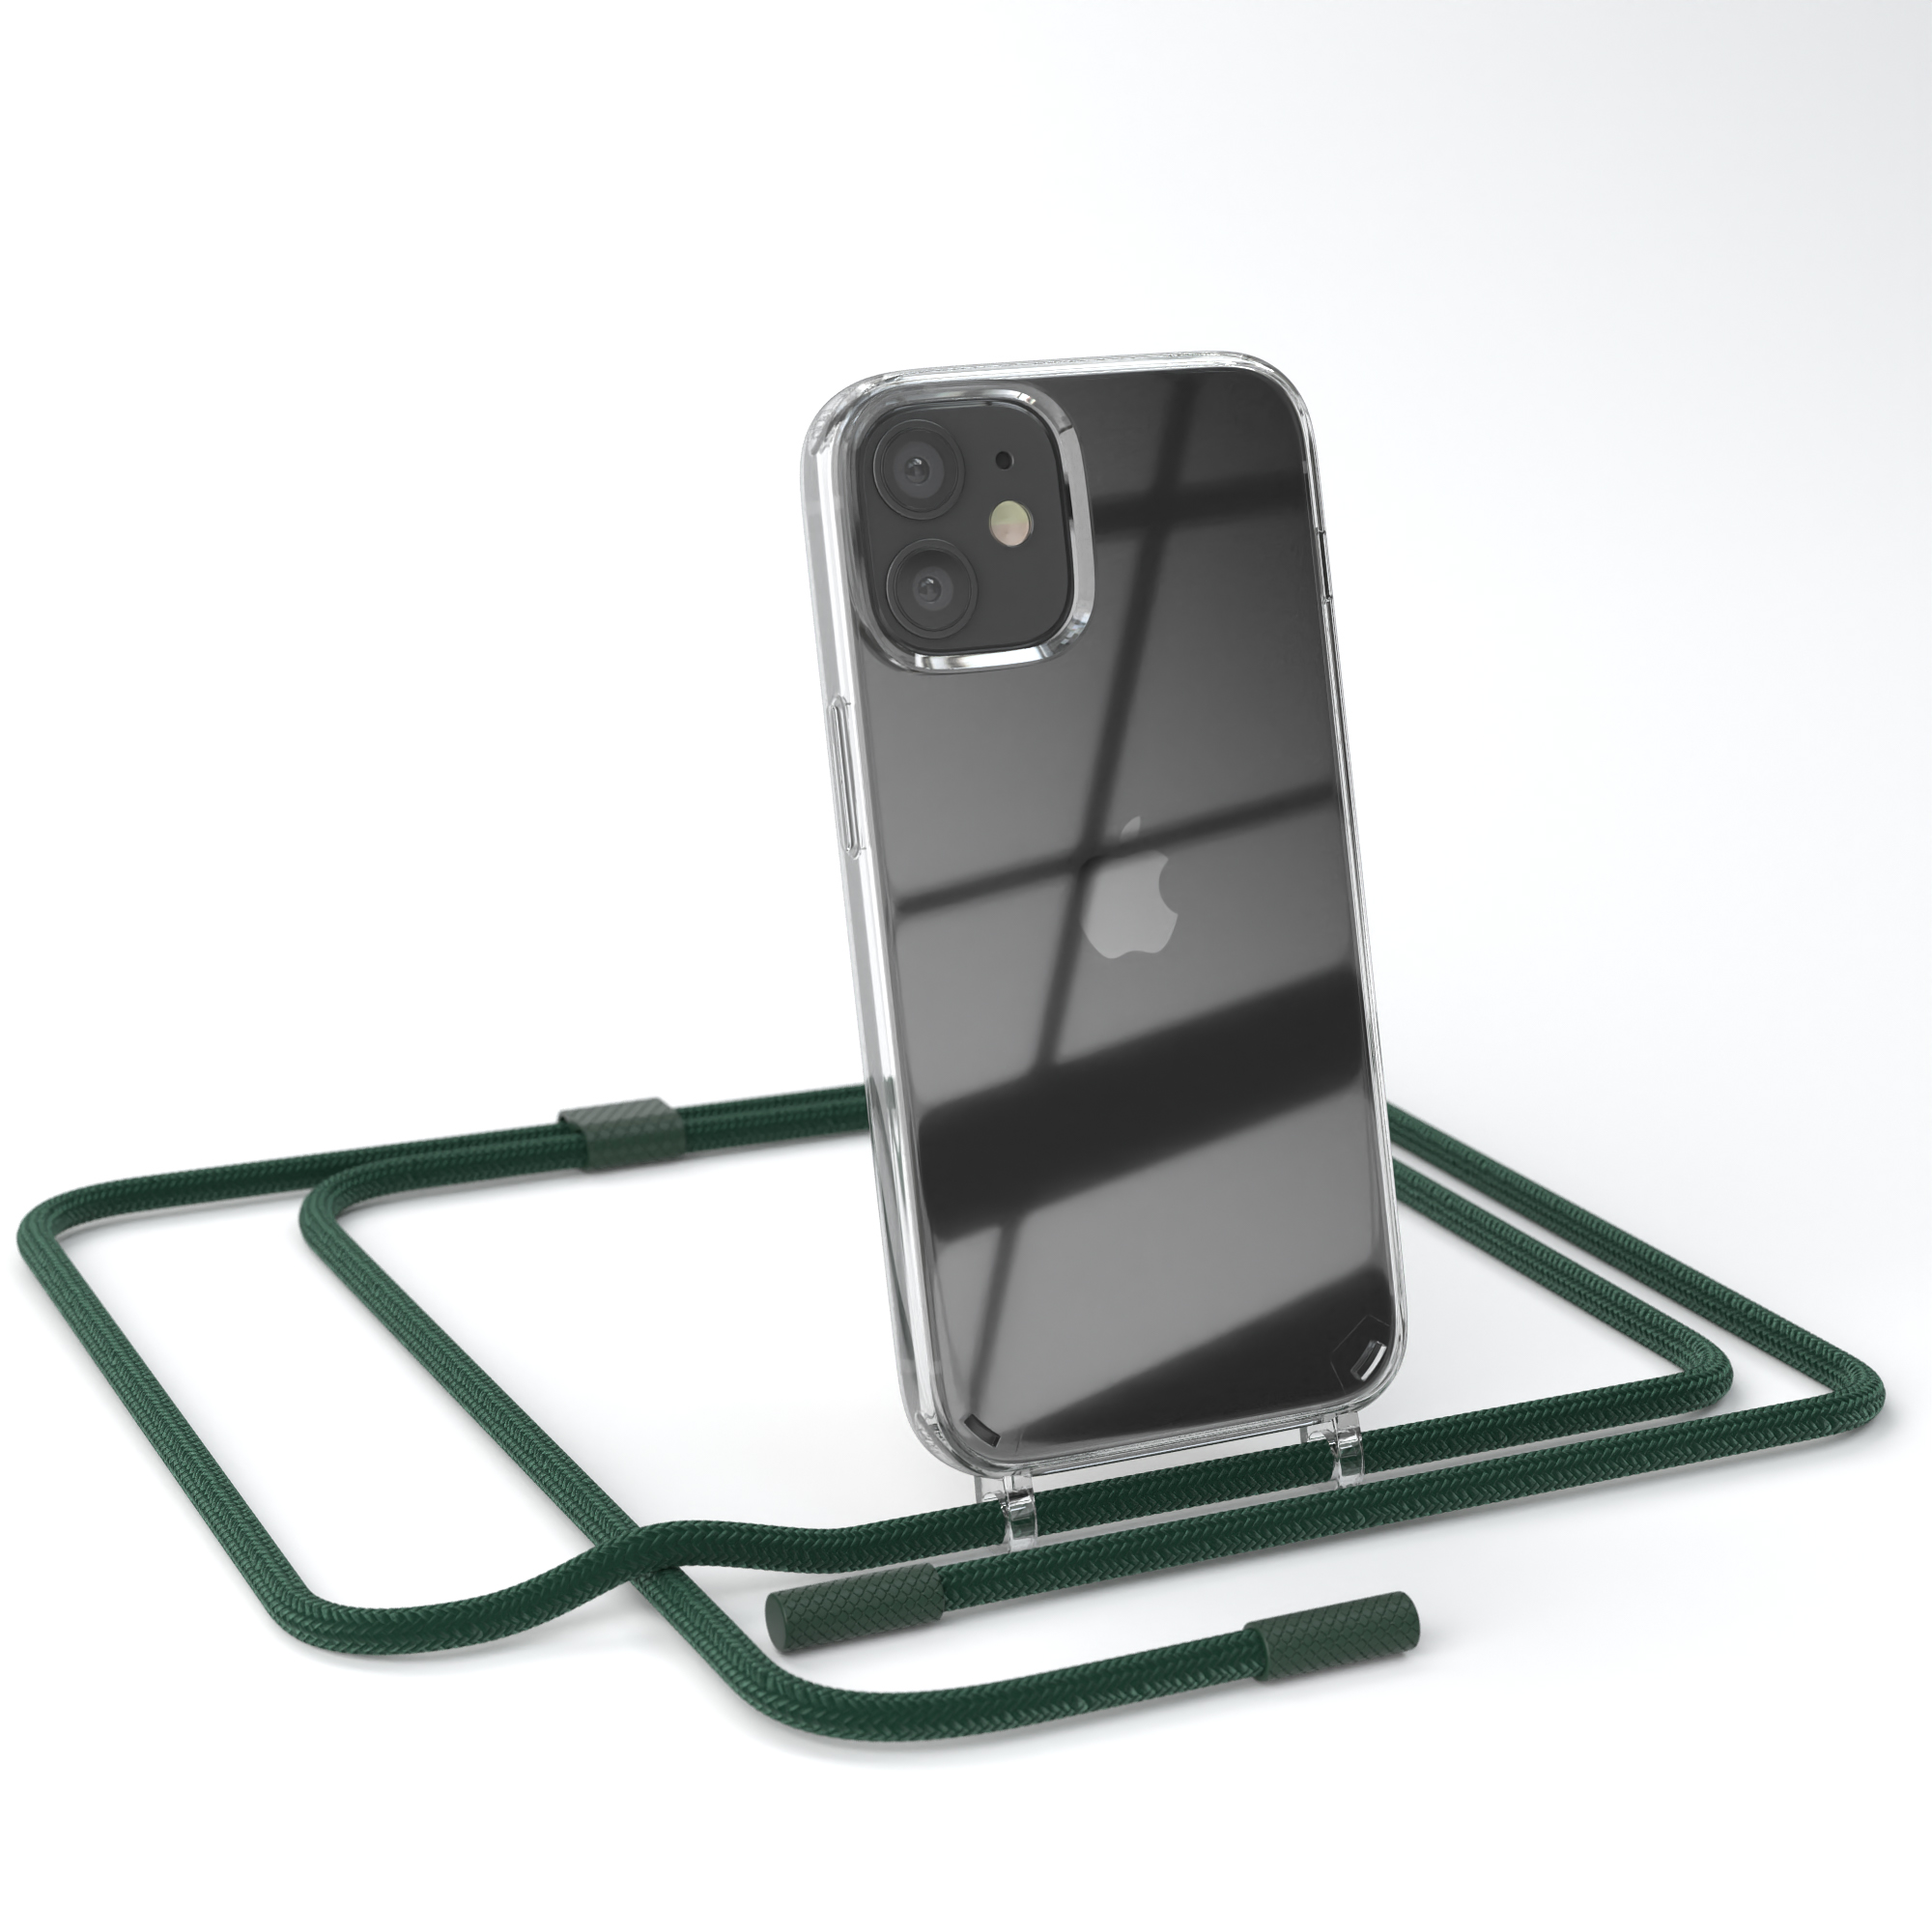 unifarbend, Mini, Dunkelgrün iPhone mit Umhängetasche, Kette Apple, CASE 12 Transparente Handyhülle EAZY / Nachtgrün runder